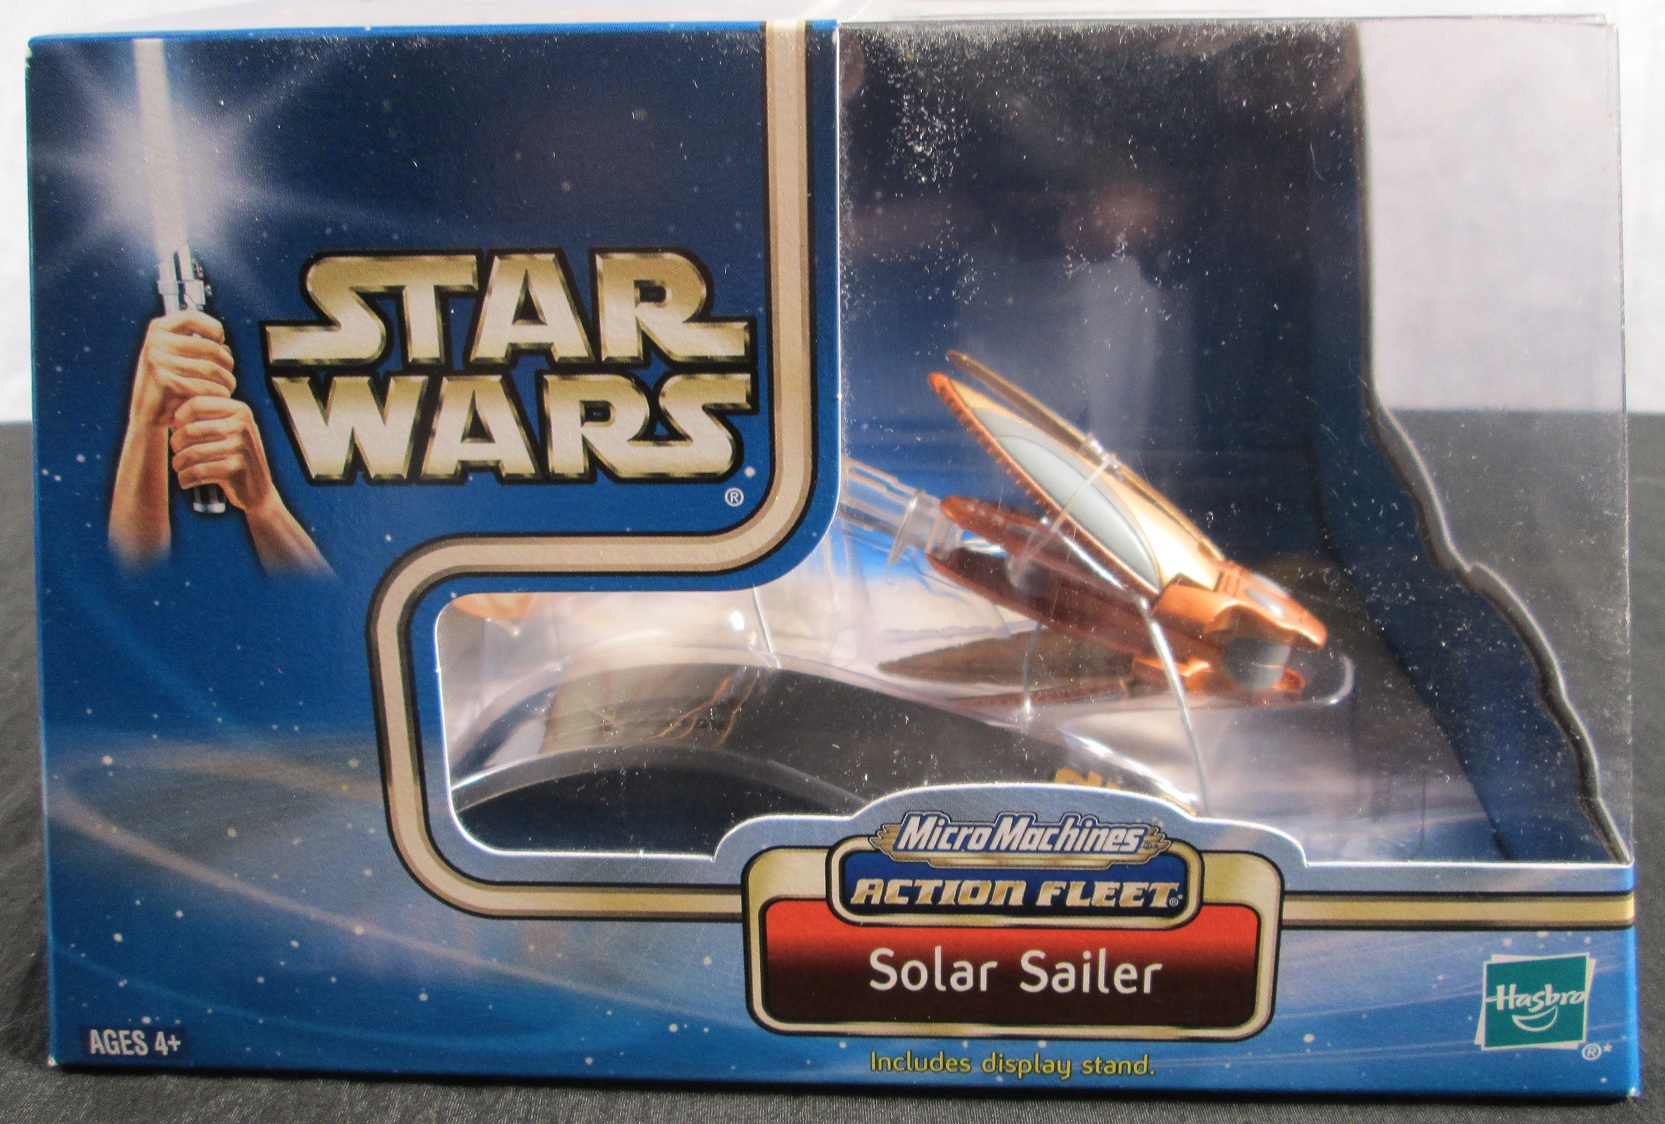 Micro Machines Star Wars Action Fleet Han Solo in Carbonite